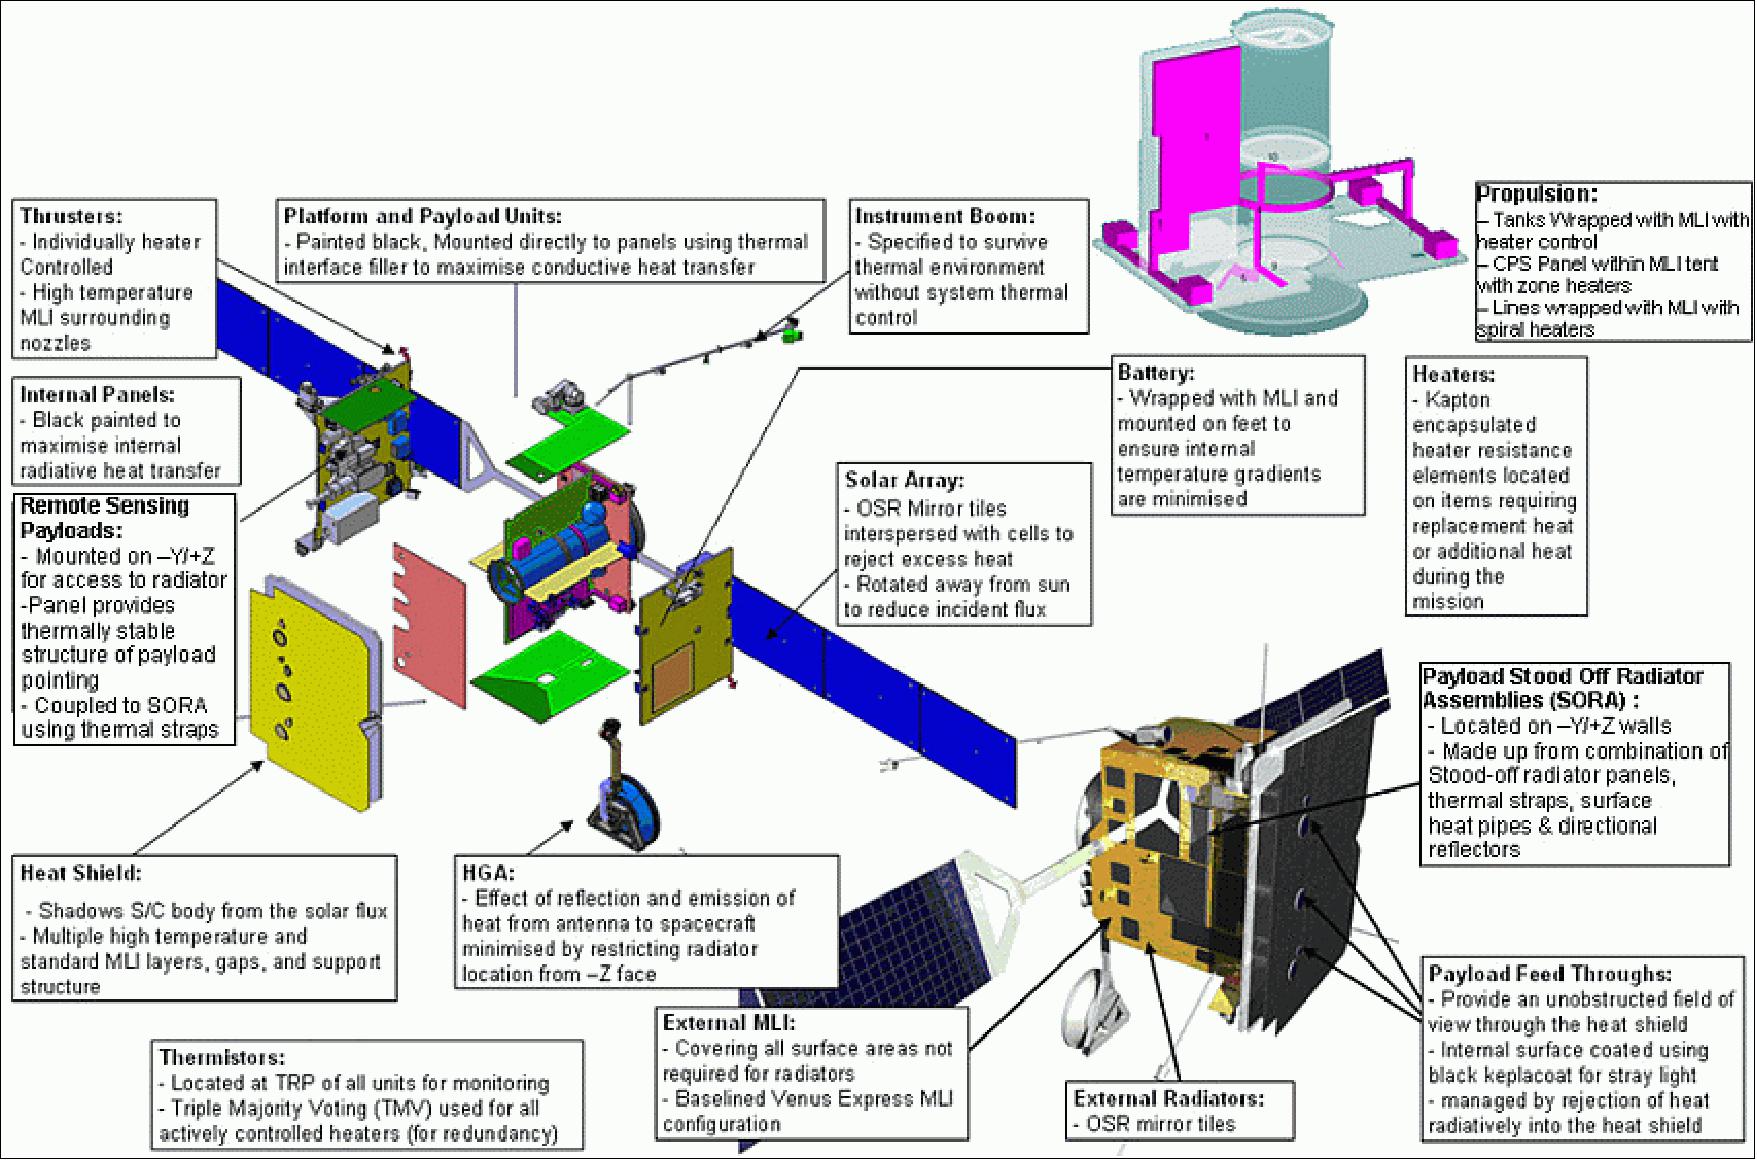 Figure 10: Overview of the TCS (image credit: Astrium Ltd., ESA)